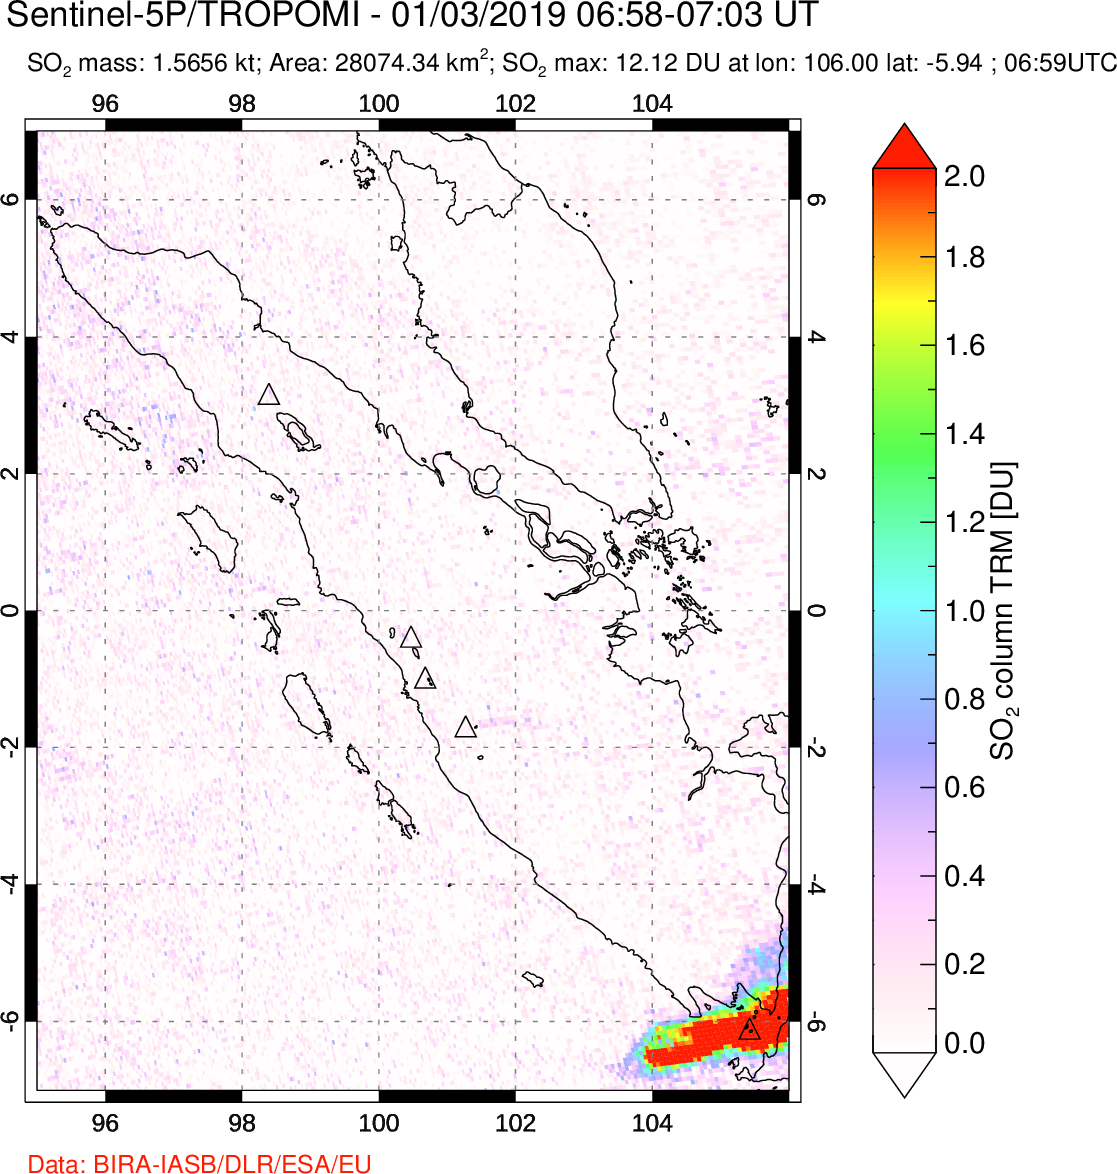 A sulfur dioxide image over Sumatra, Indonesia on Jan 03, 2019.